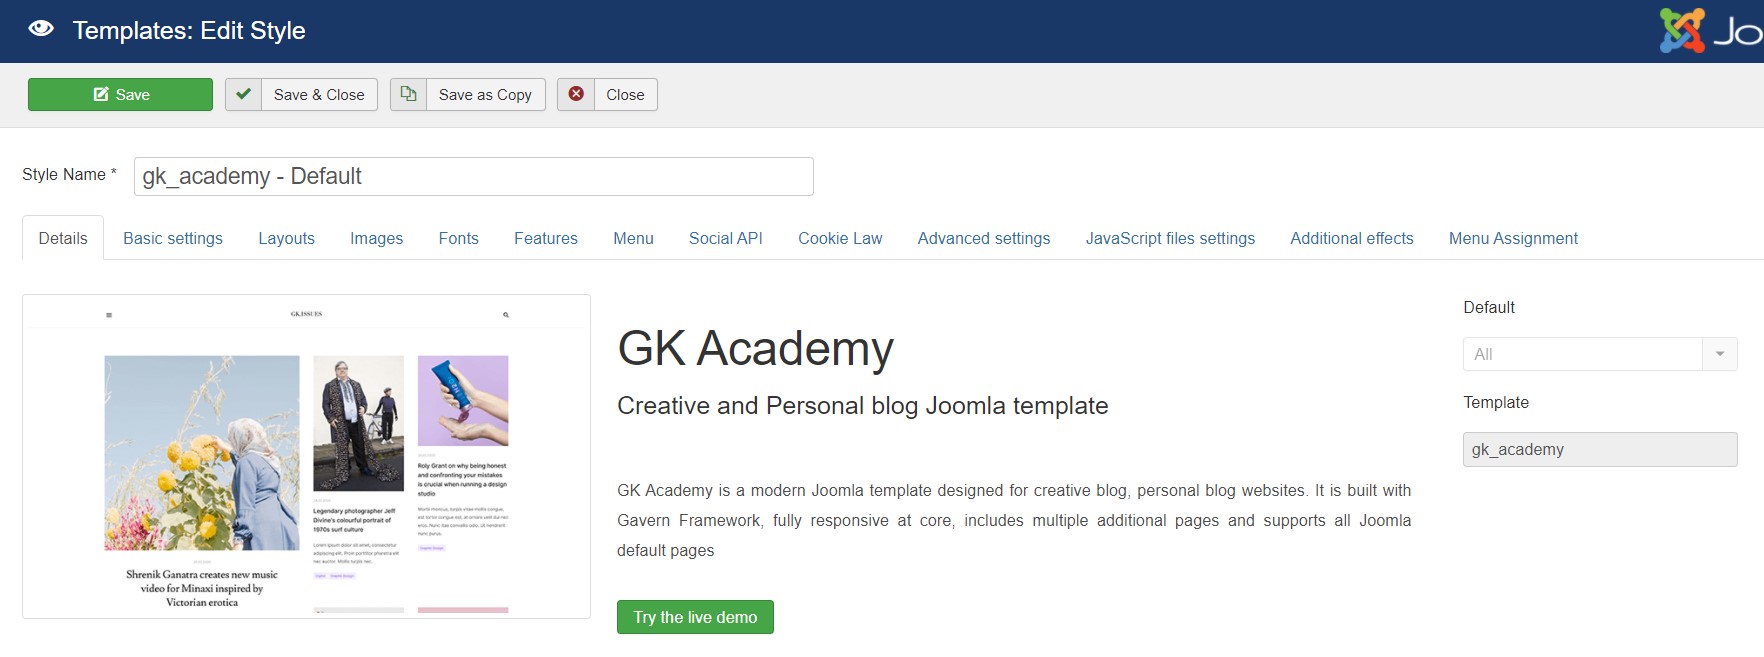 GK Academy template settings